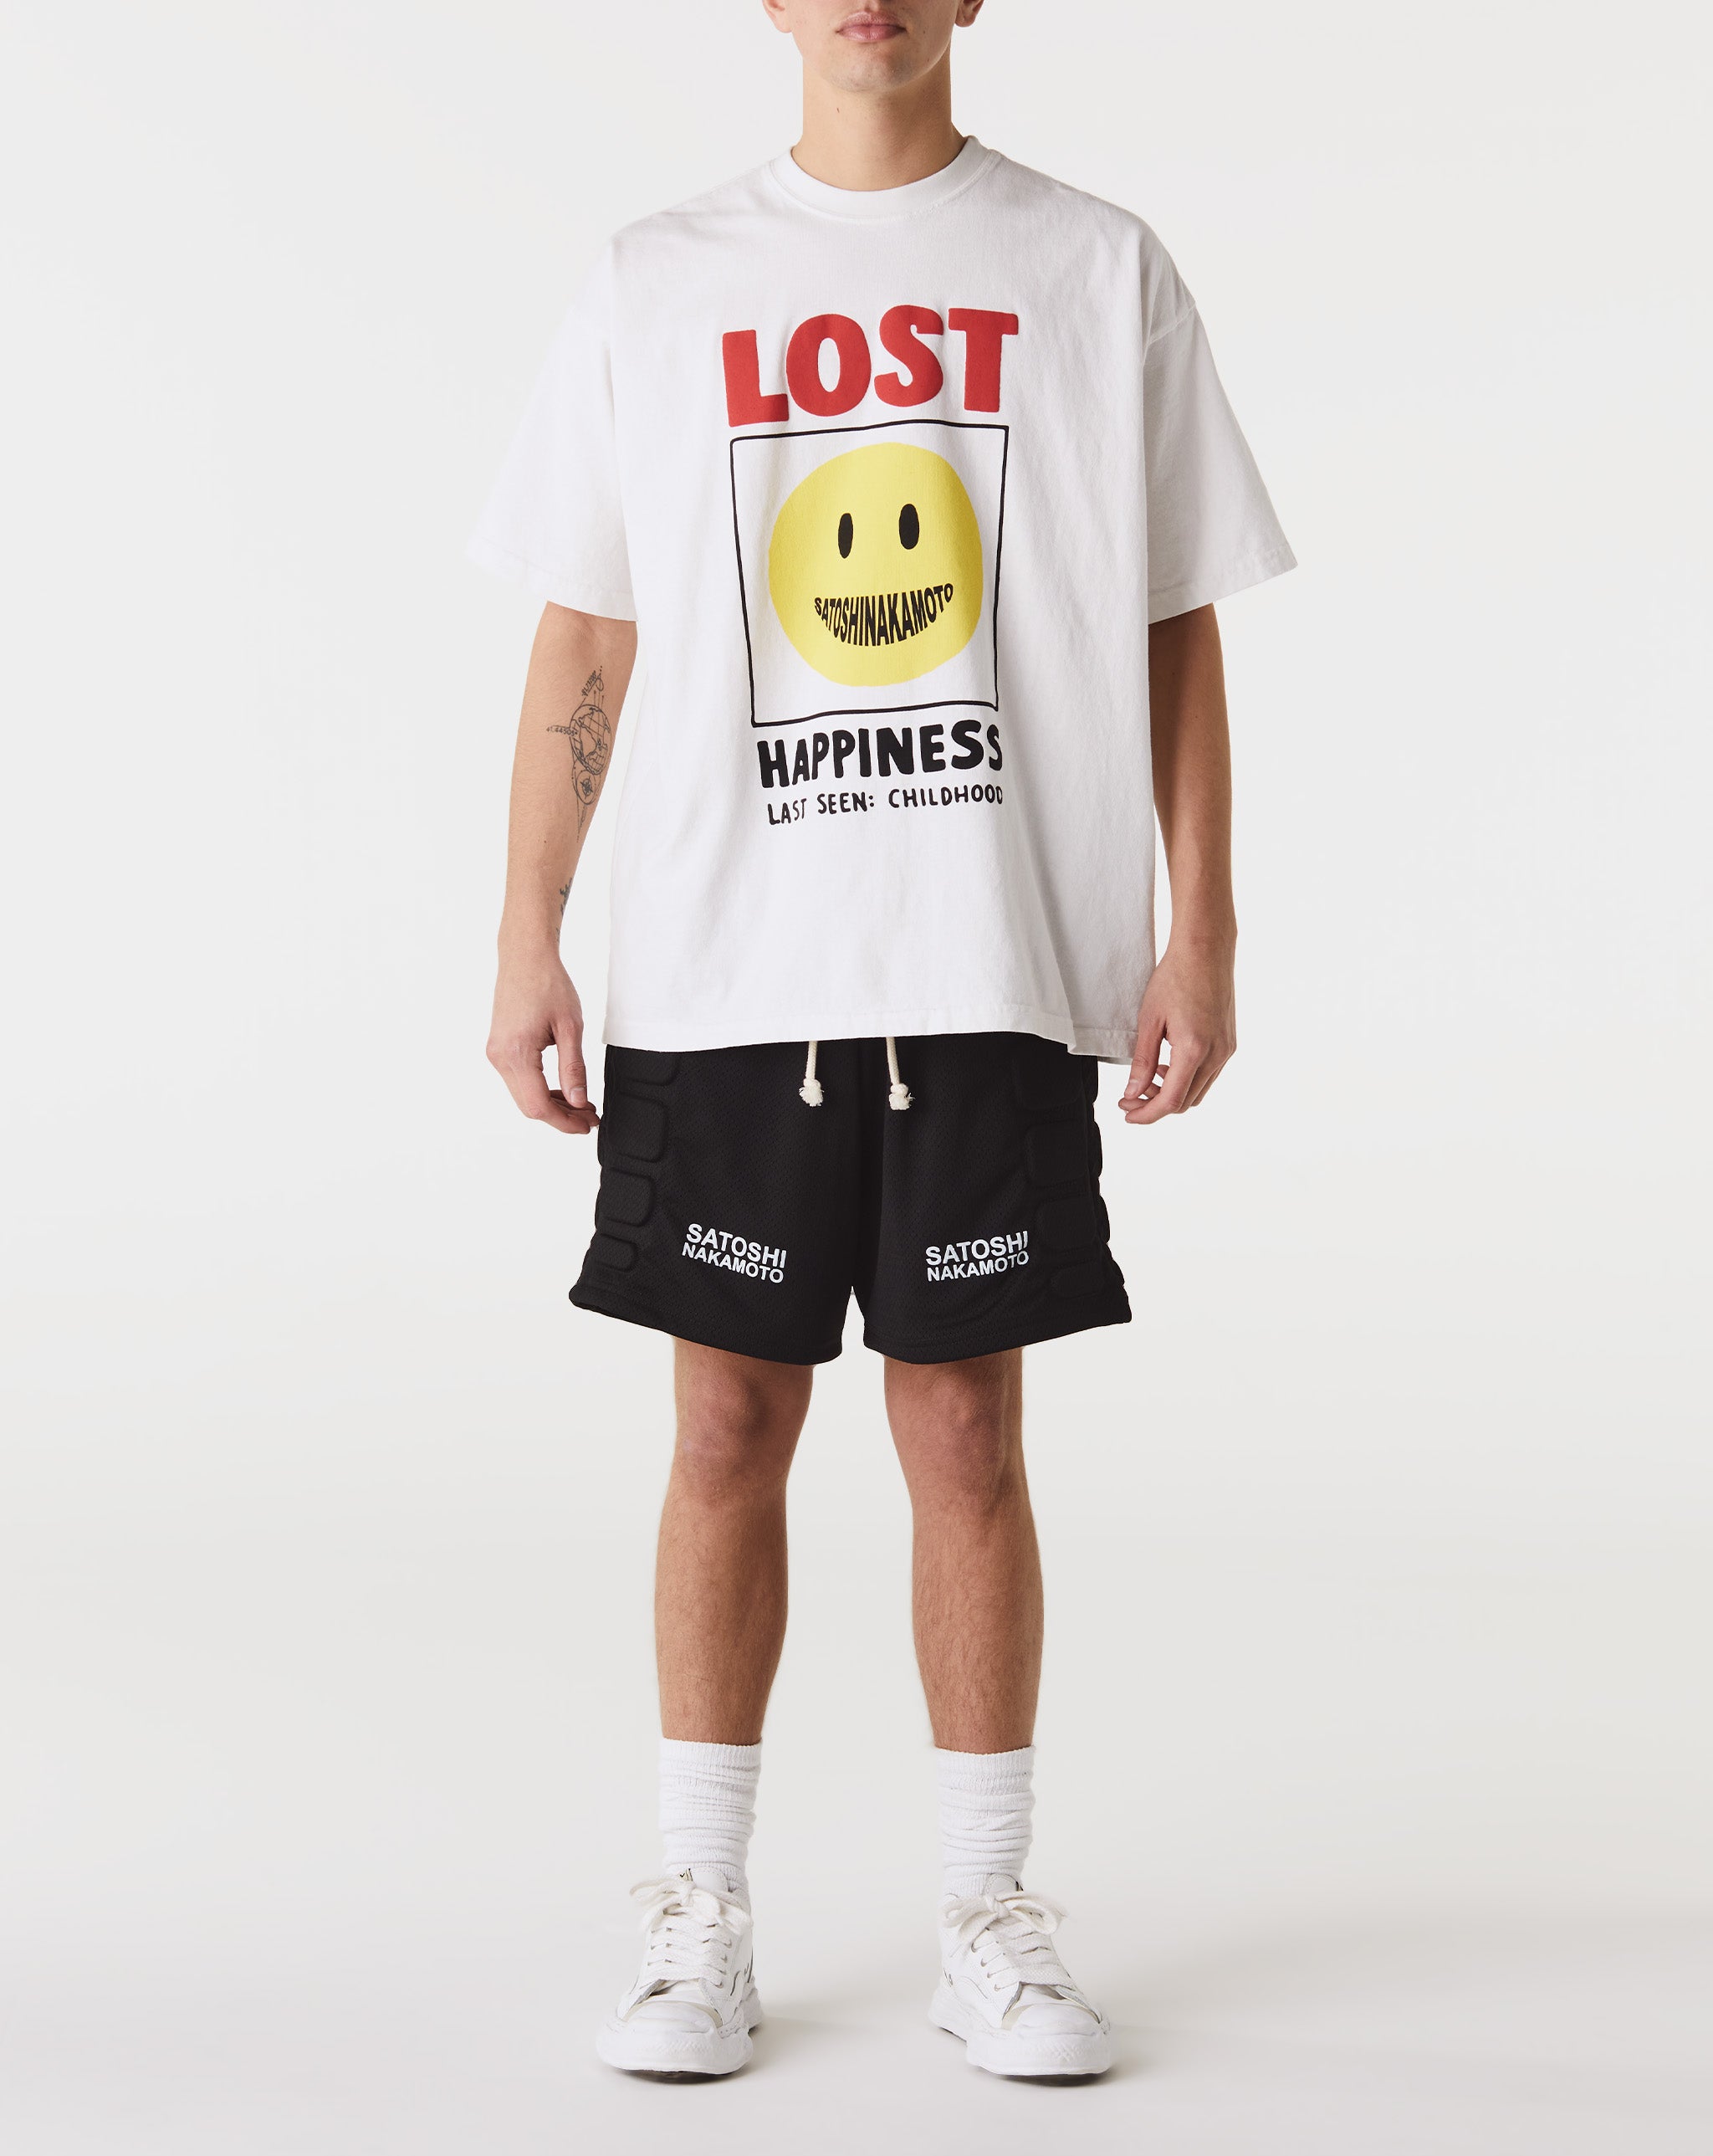 Satoshi Nakamoto Lost Happiness T-Shirt  - Cheap Cerbe Jordan outlet